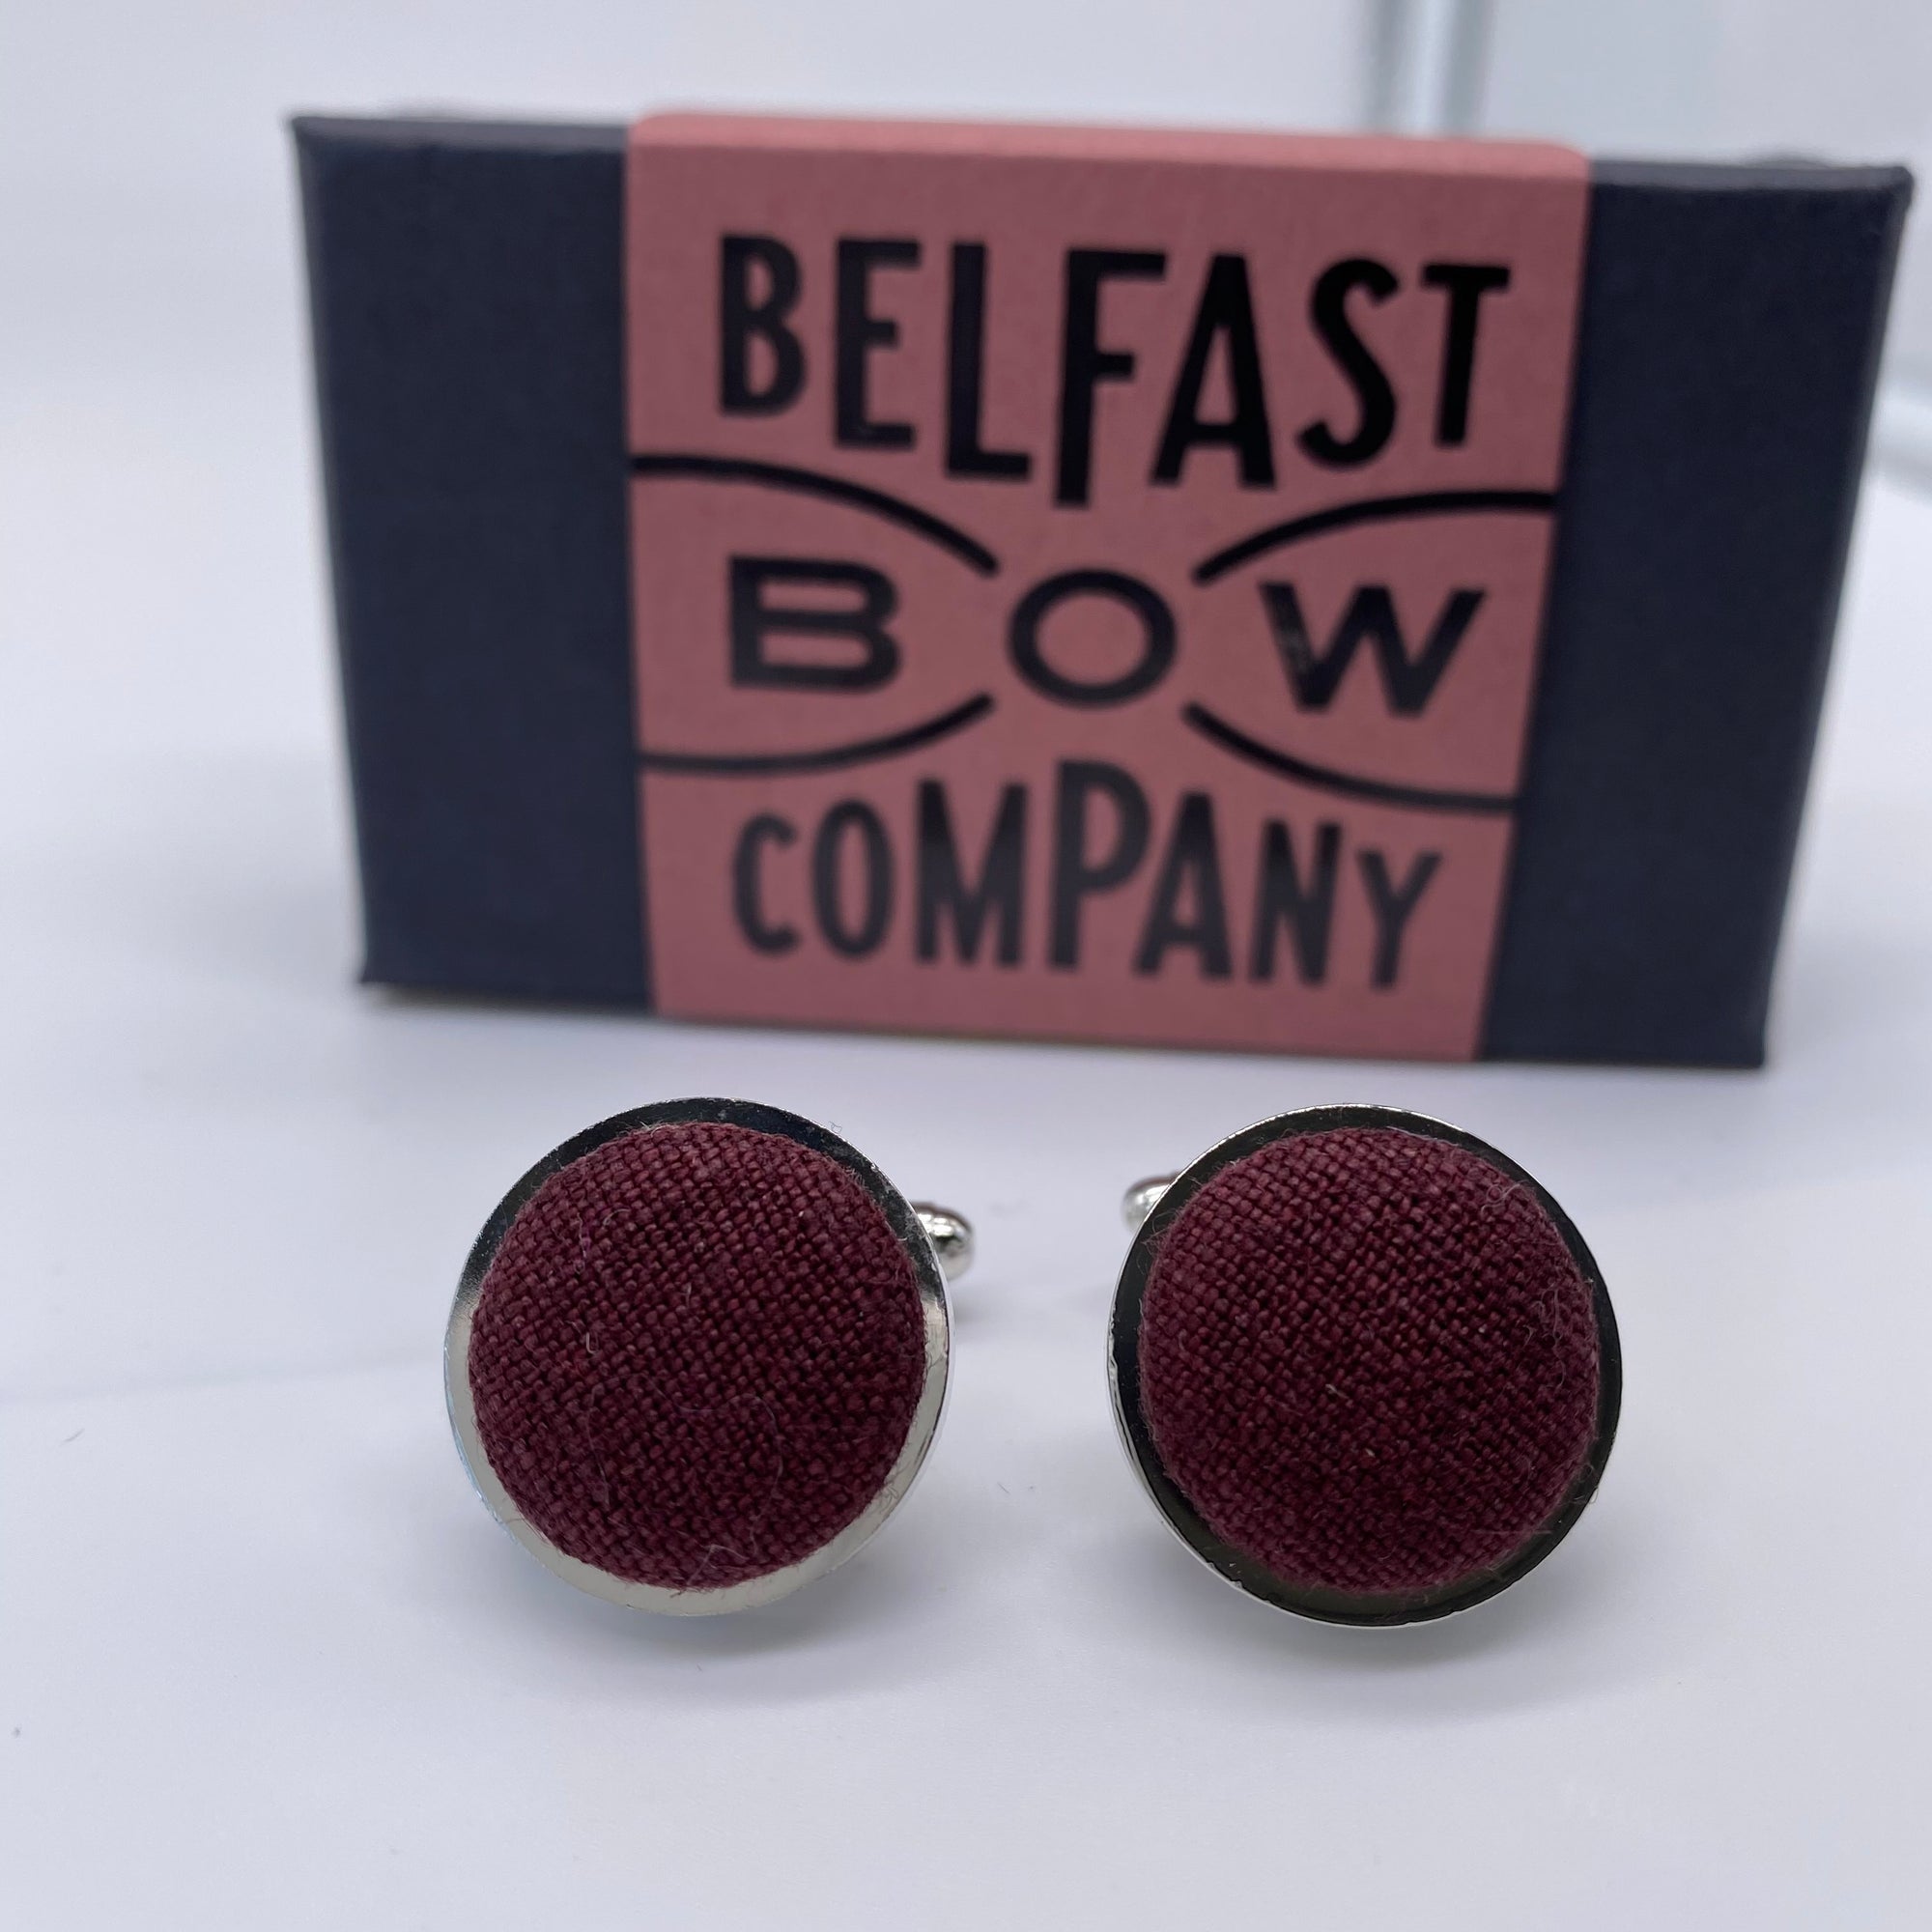 Irish Linen Cufflinks in Burgundy by the Belfast Bow Company